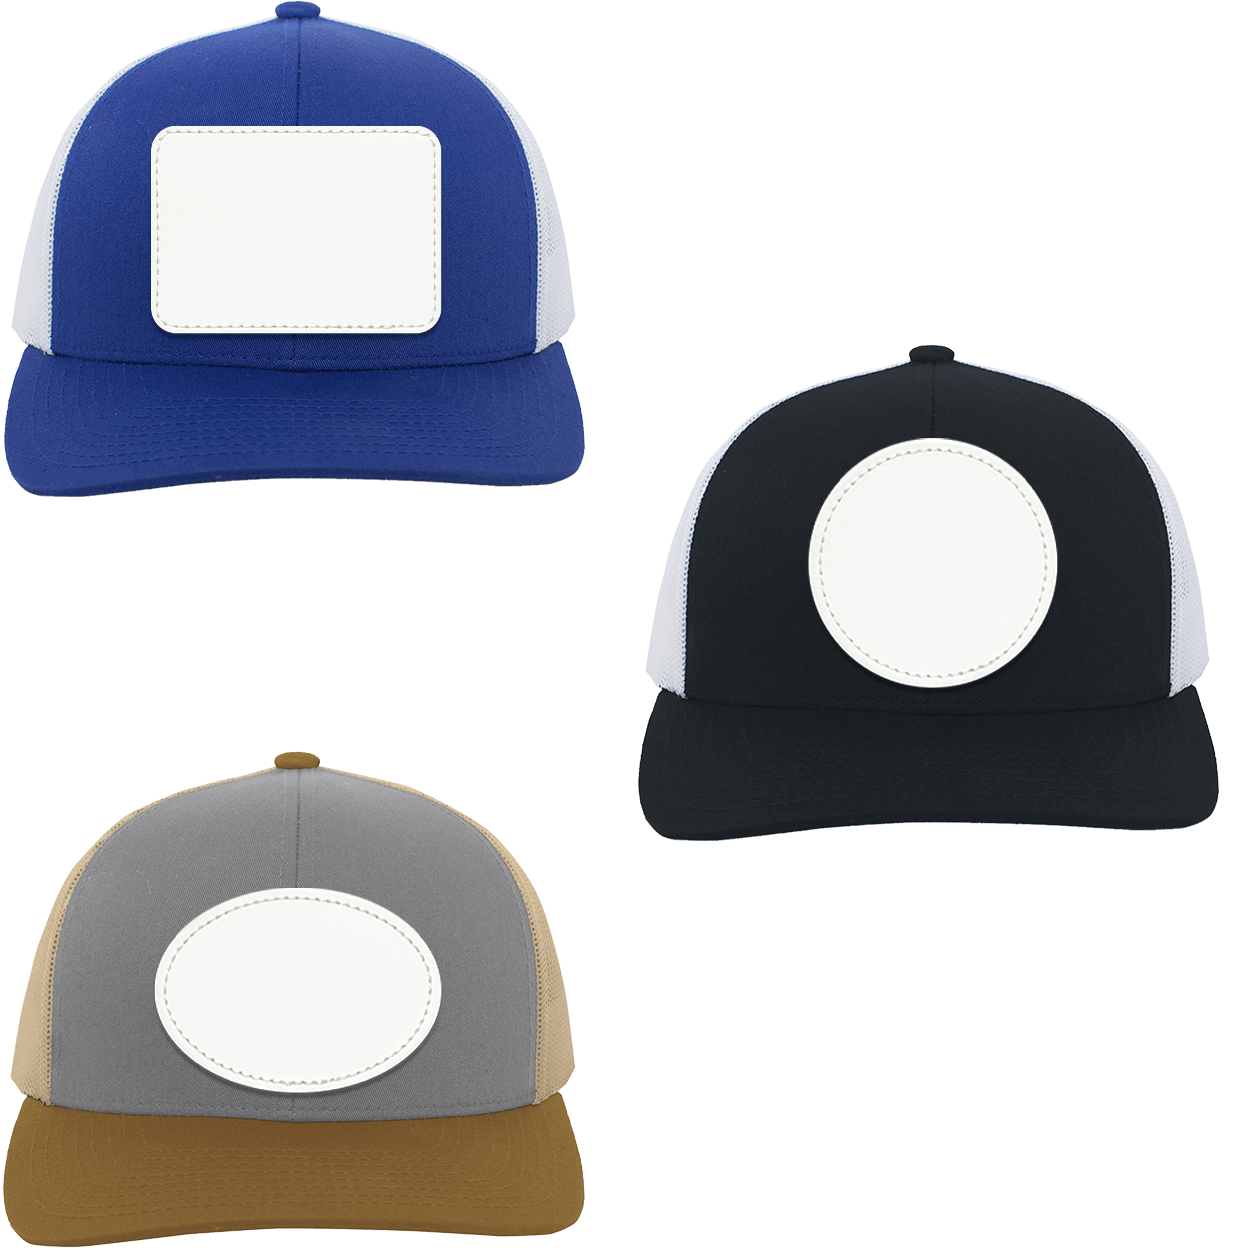 Guide] Selling Custom Patch Hats - CustomCat